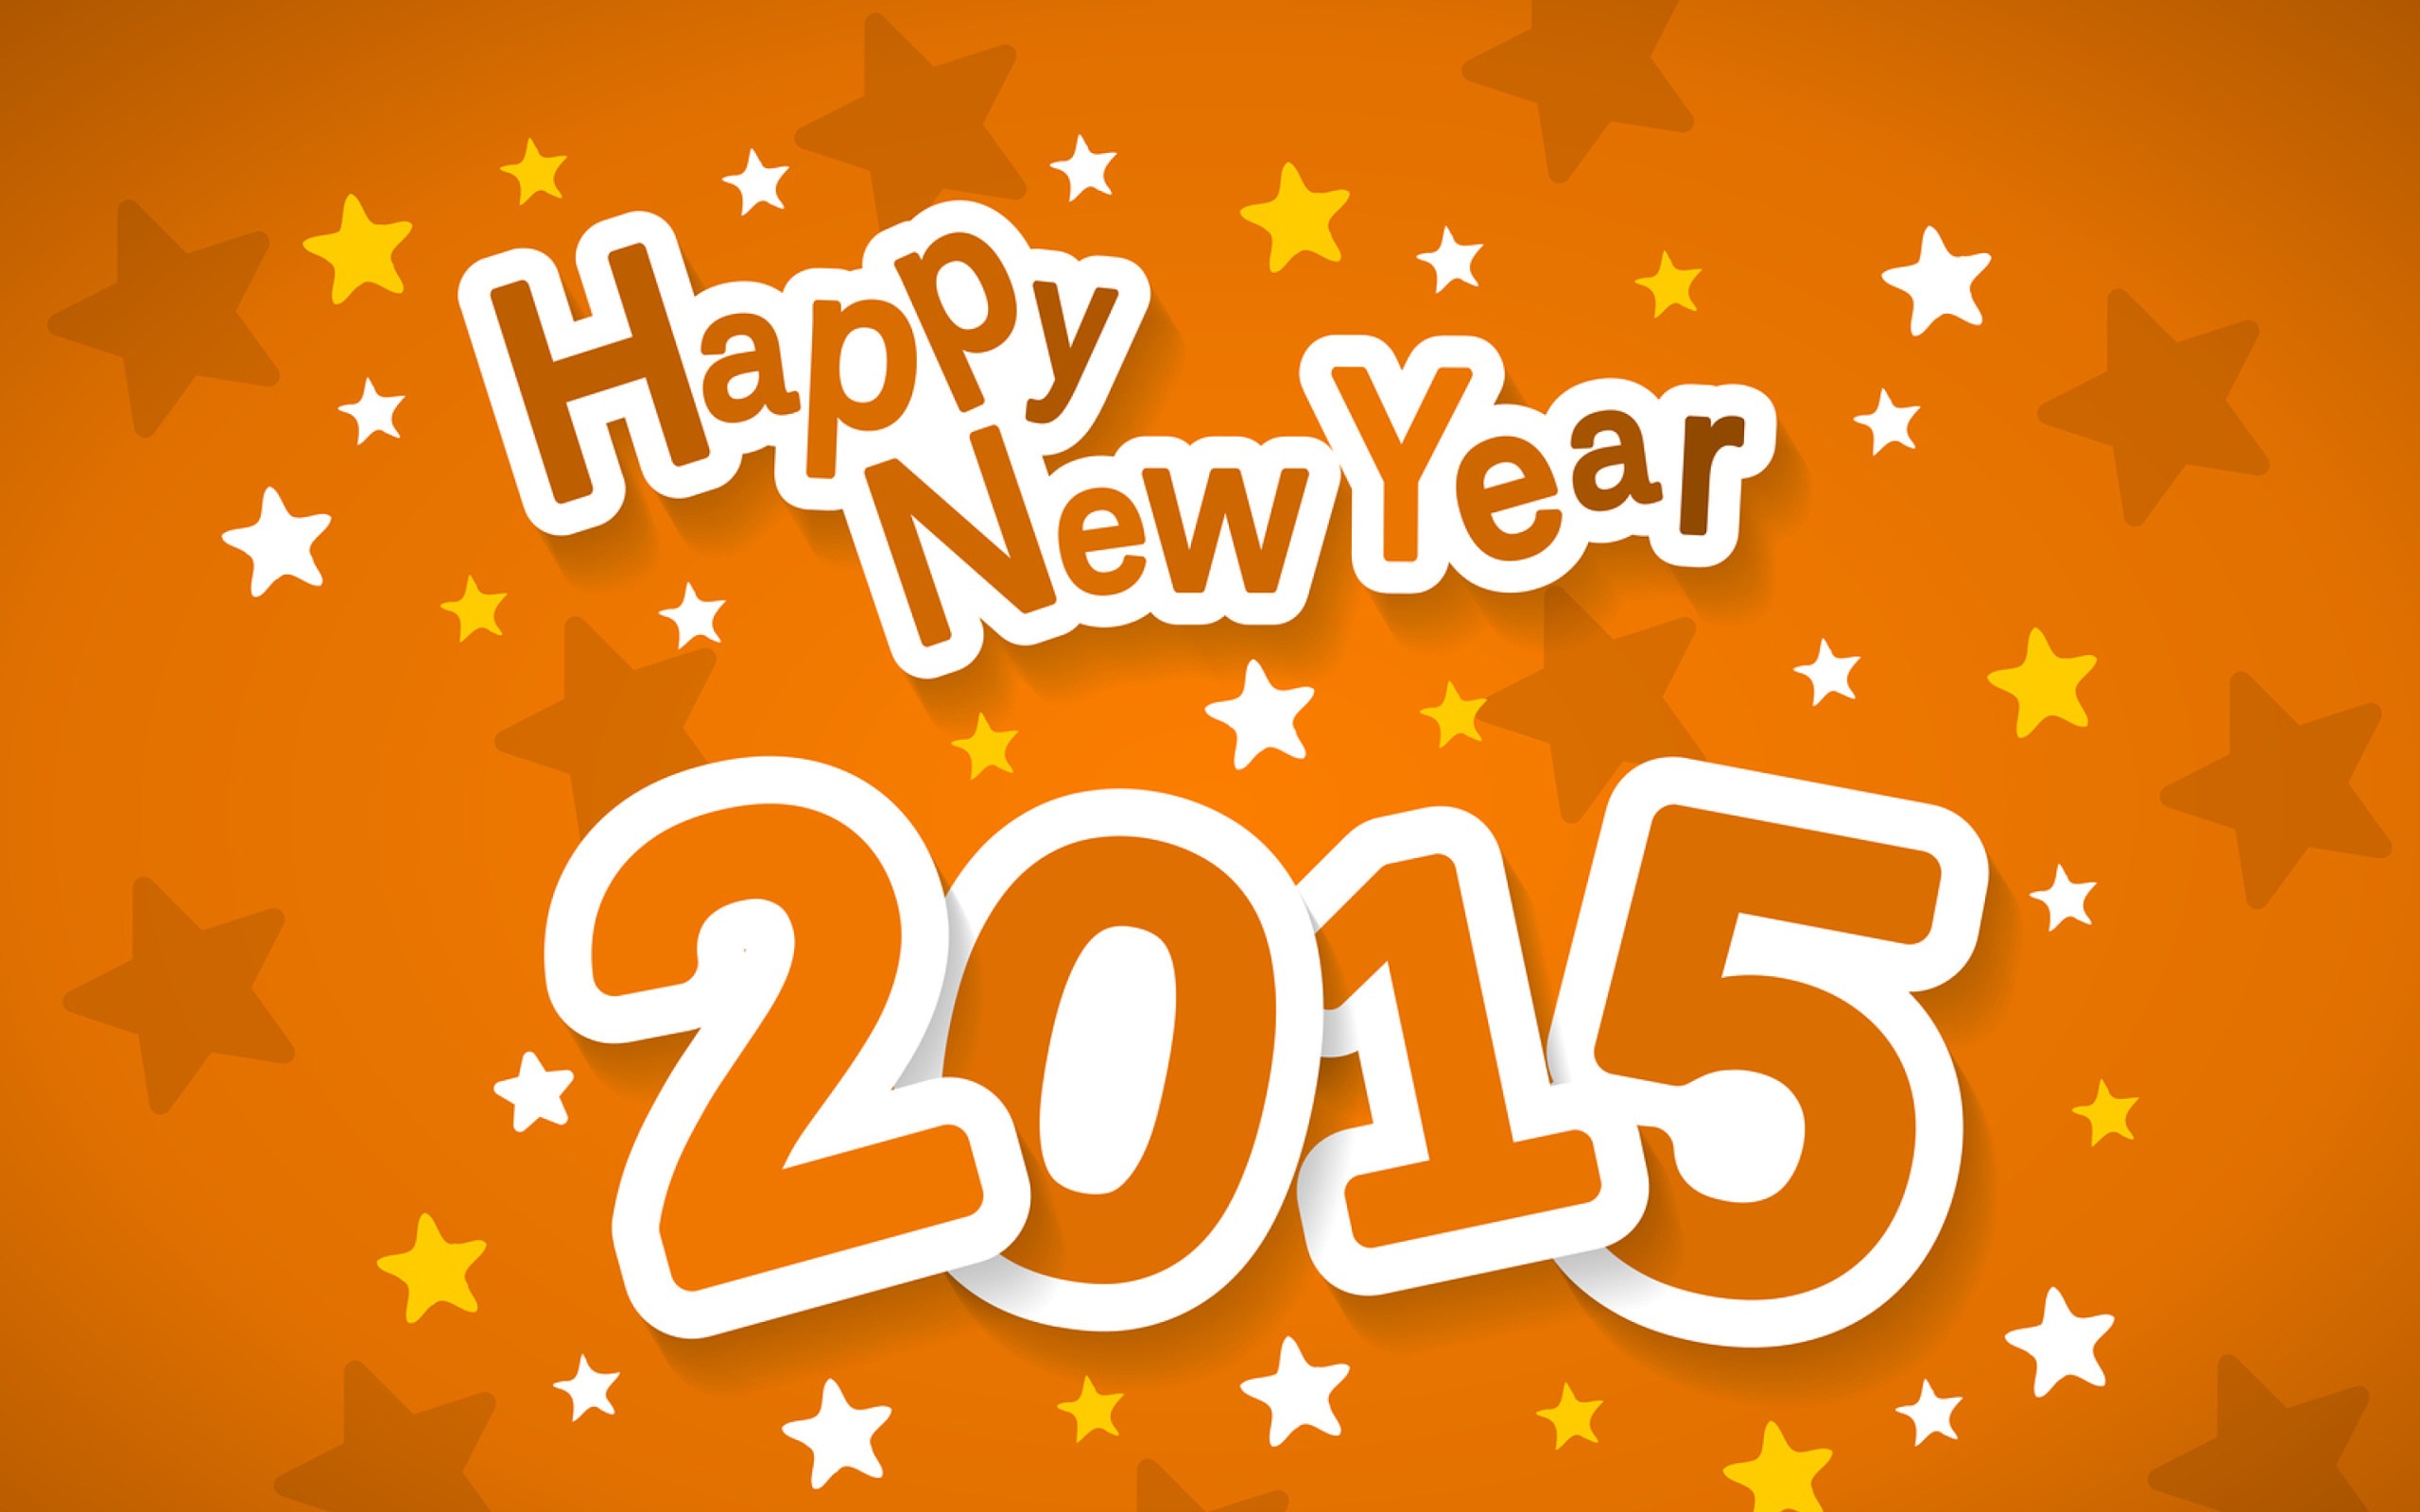 Happy New Year 2015 wallpaper 2560x1600. 